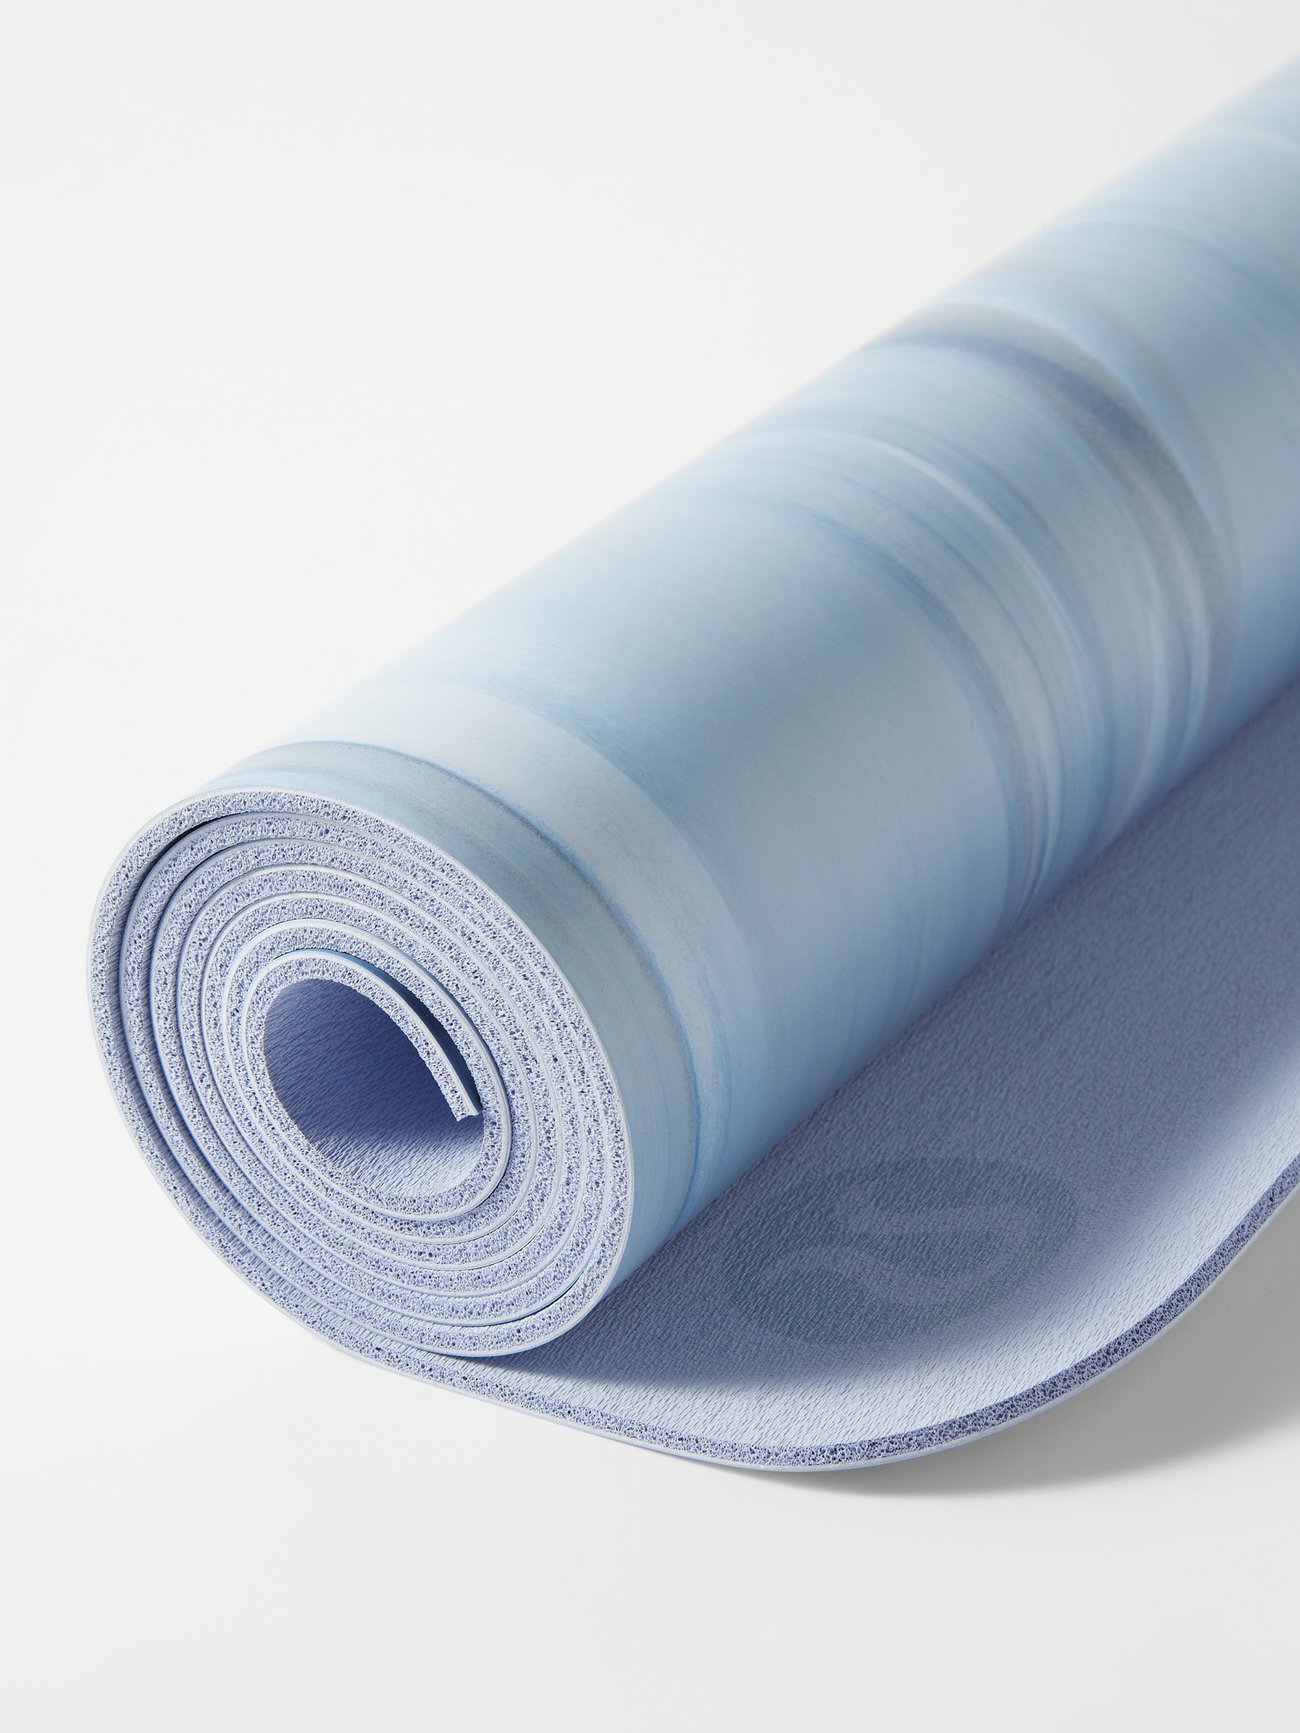 Blue The Mat 5mm marbled yoga mat, lululemon